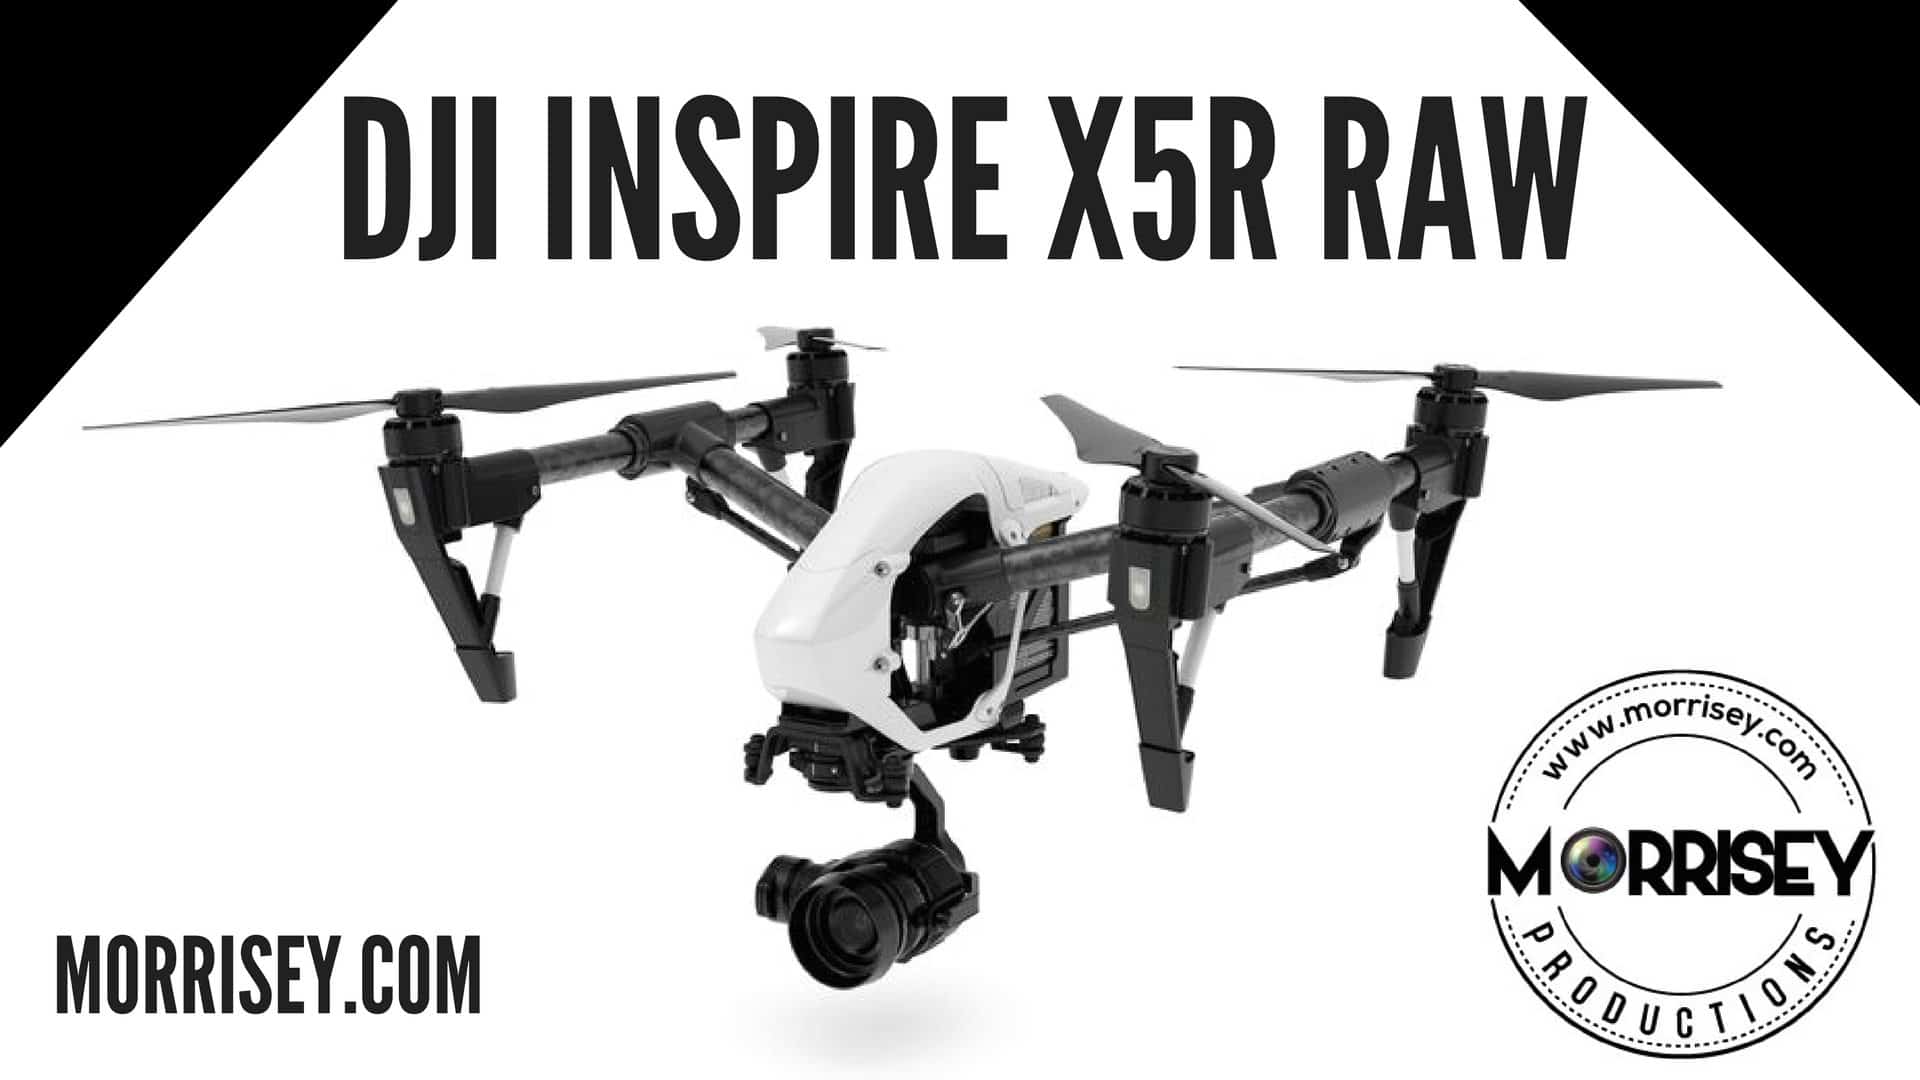 dji-inspire-x5r-raw-aerial-photography